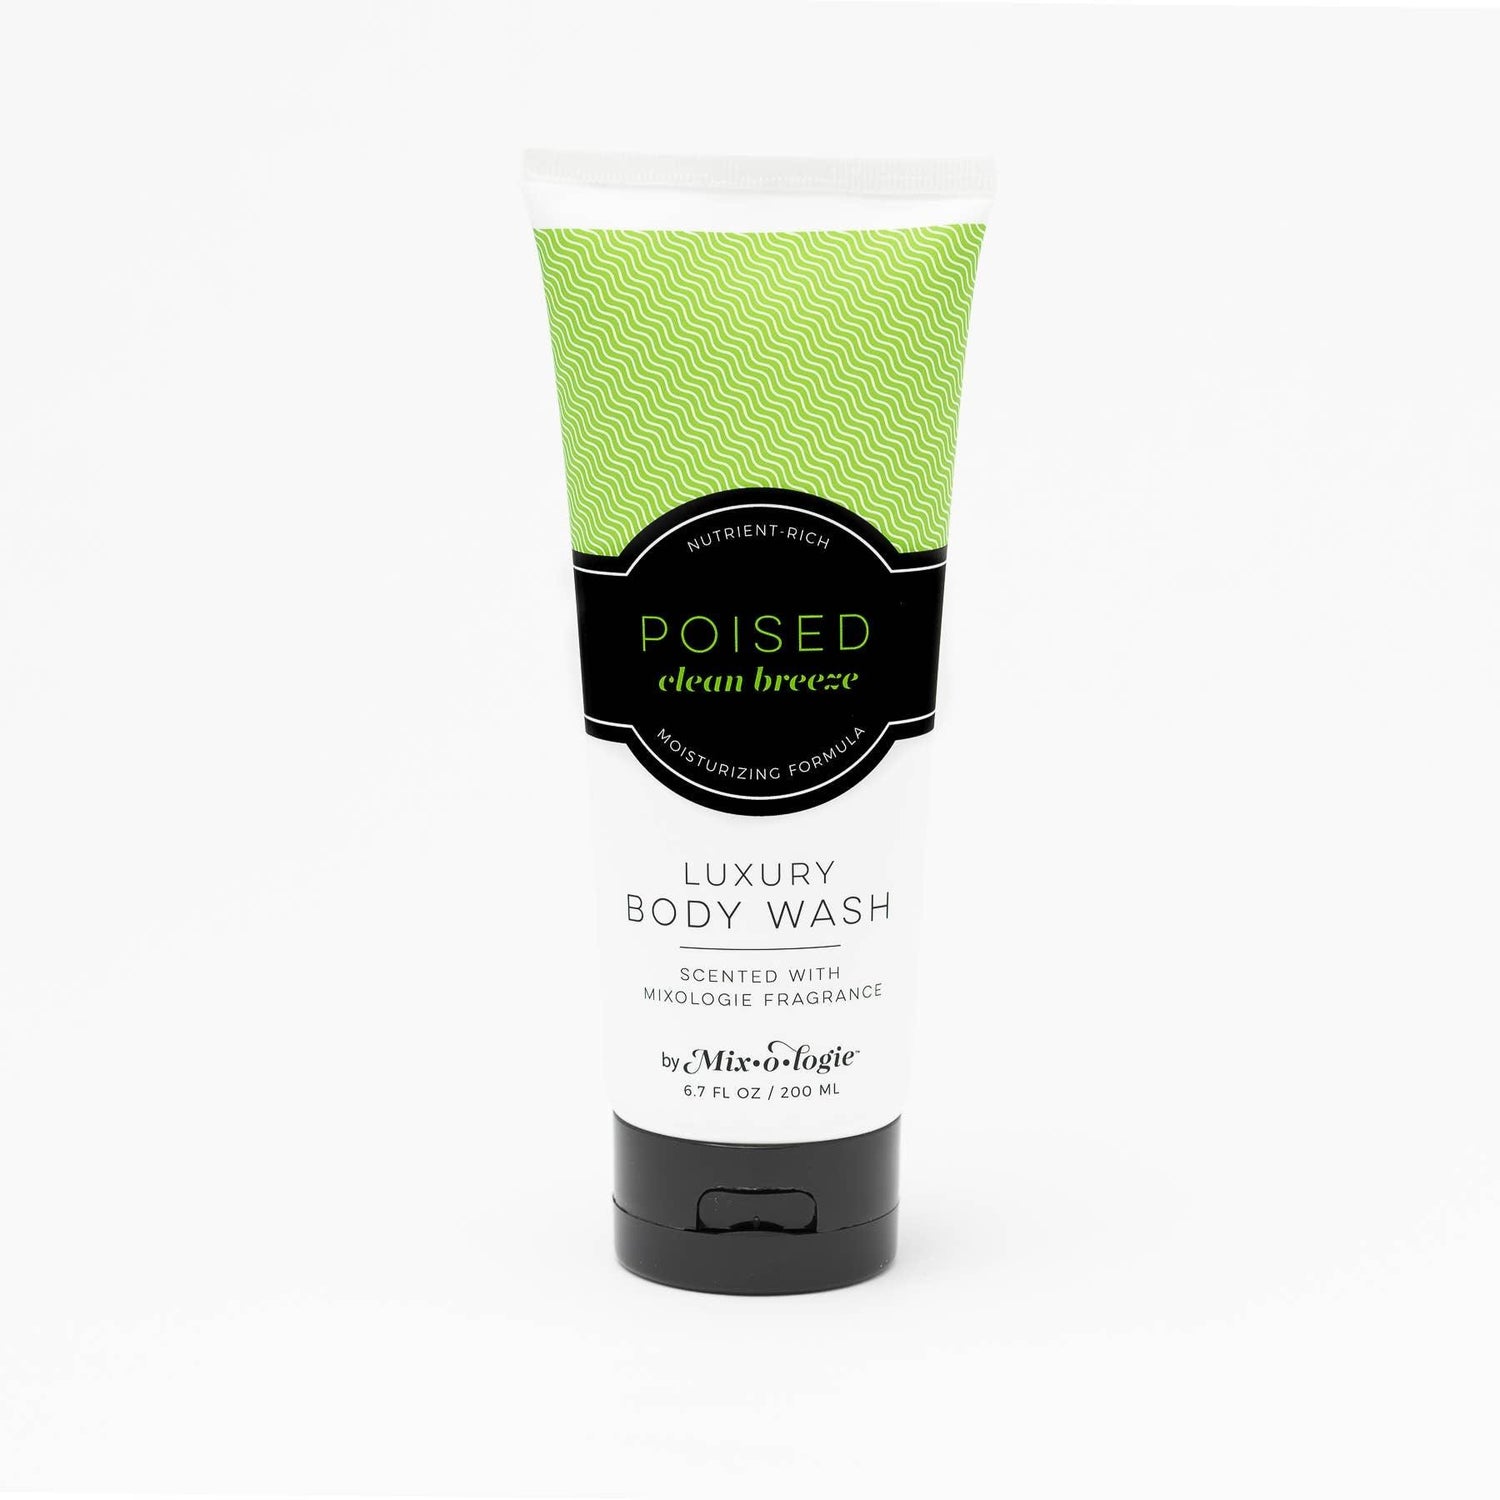 Luxury Body Wash / Shower Gel - Poised (clean breeze) scent